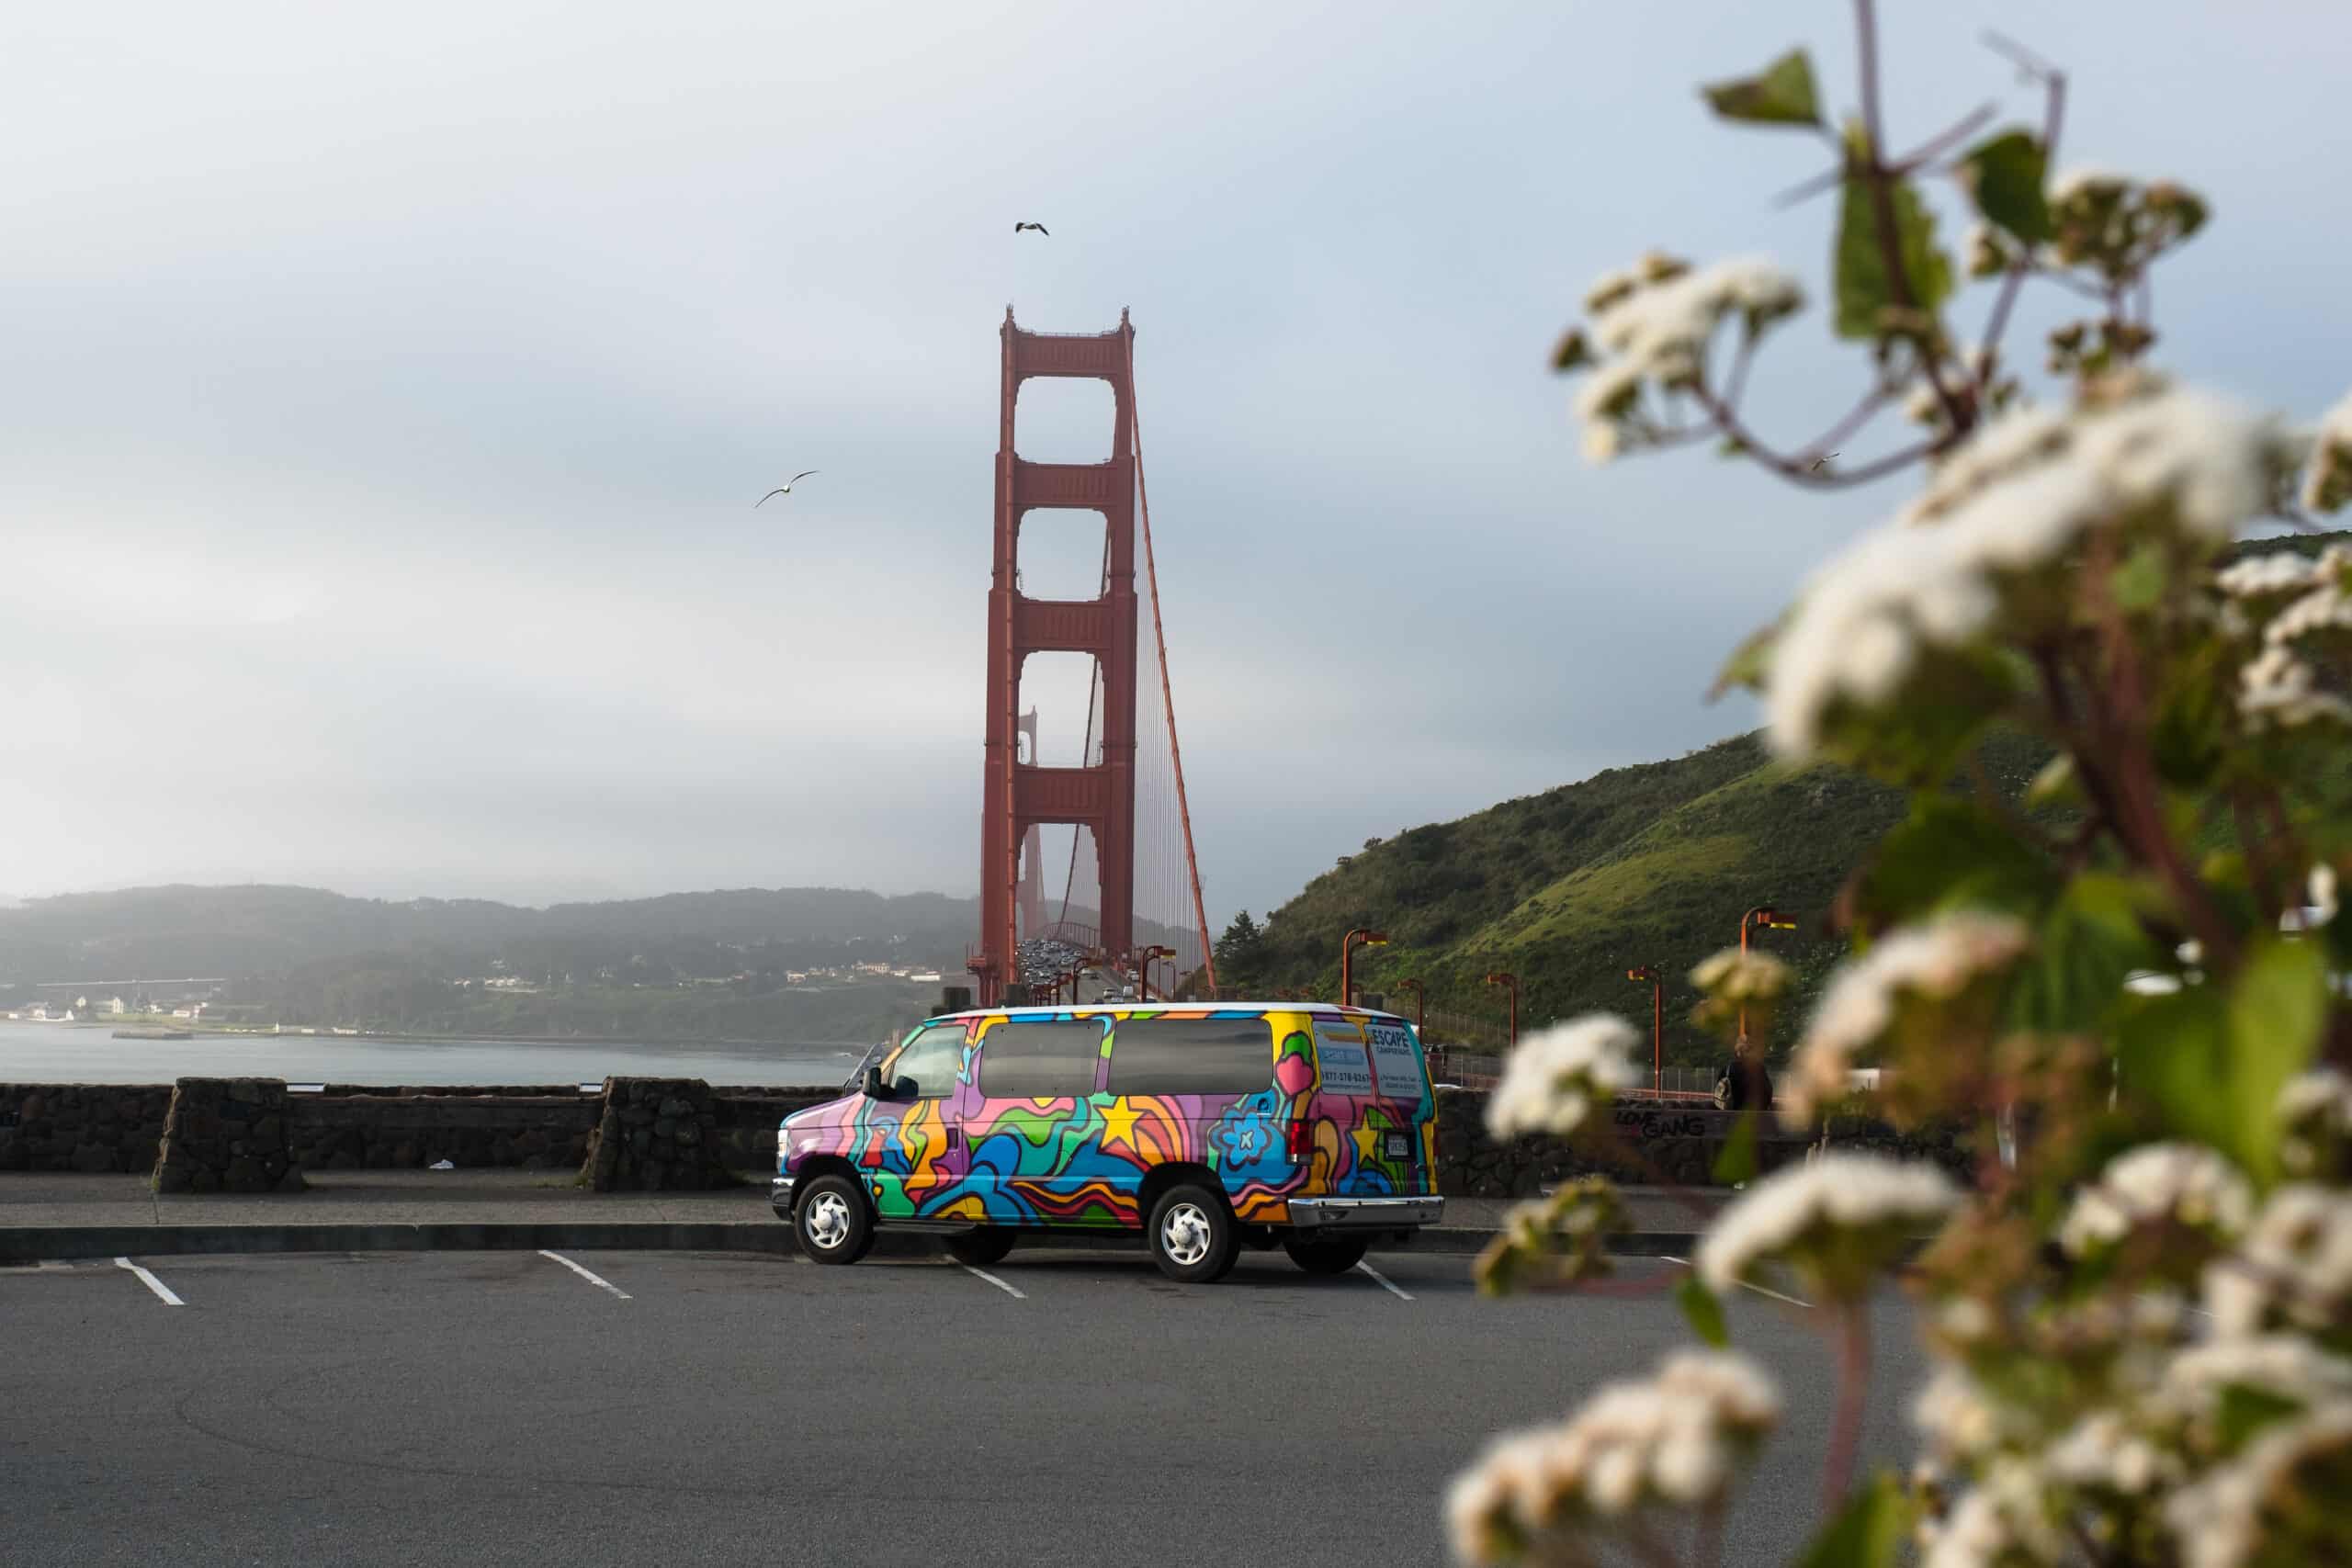 An Escape camper van parked in front of the Golden Gate Bridge.